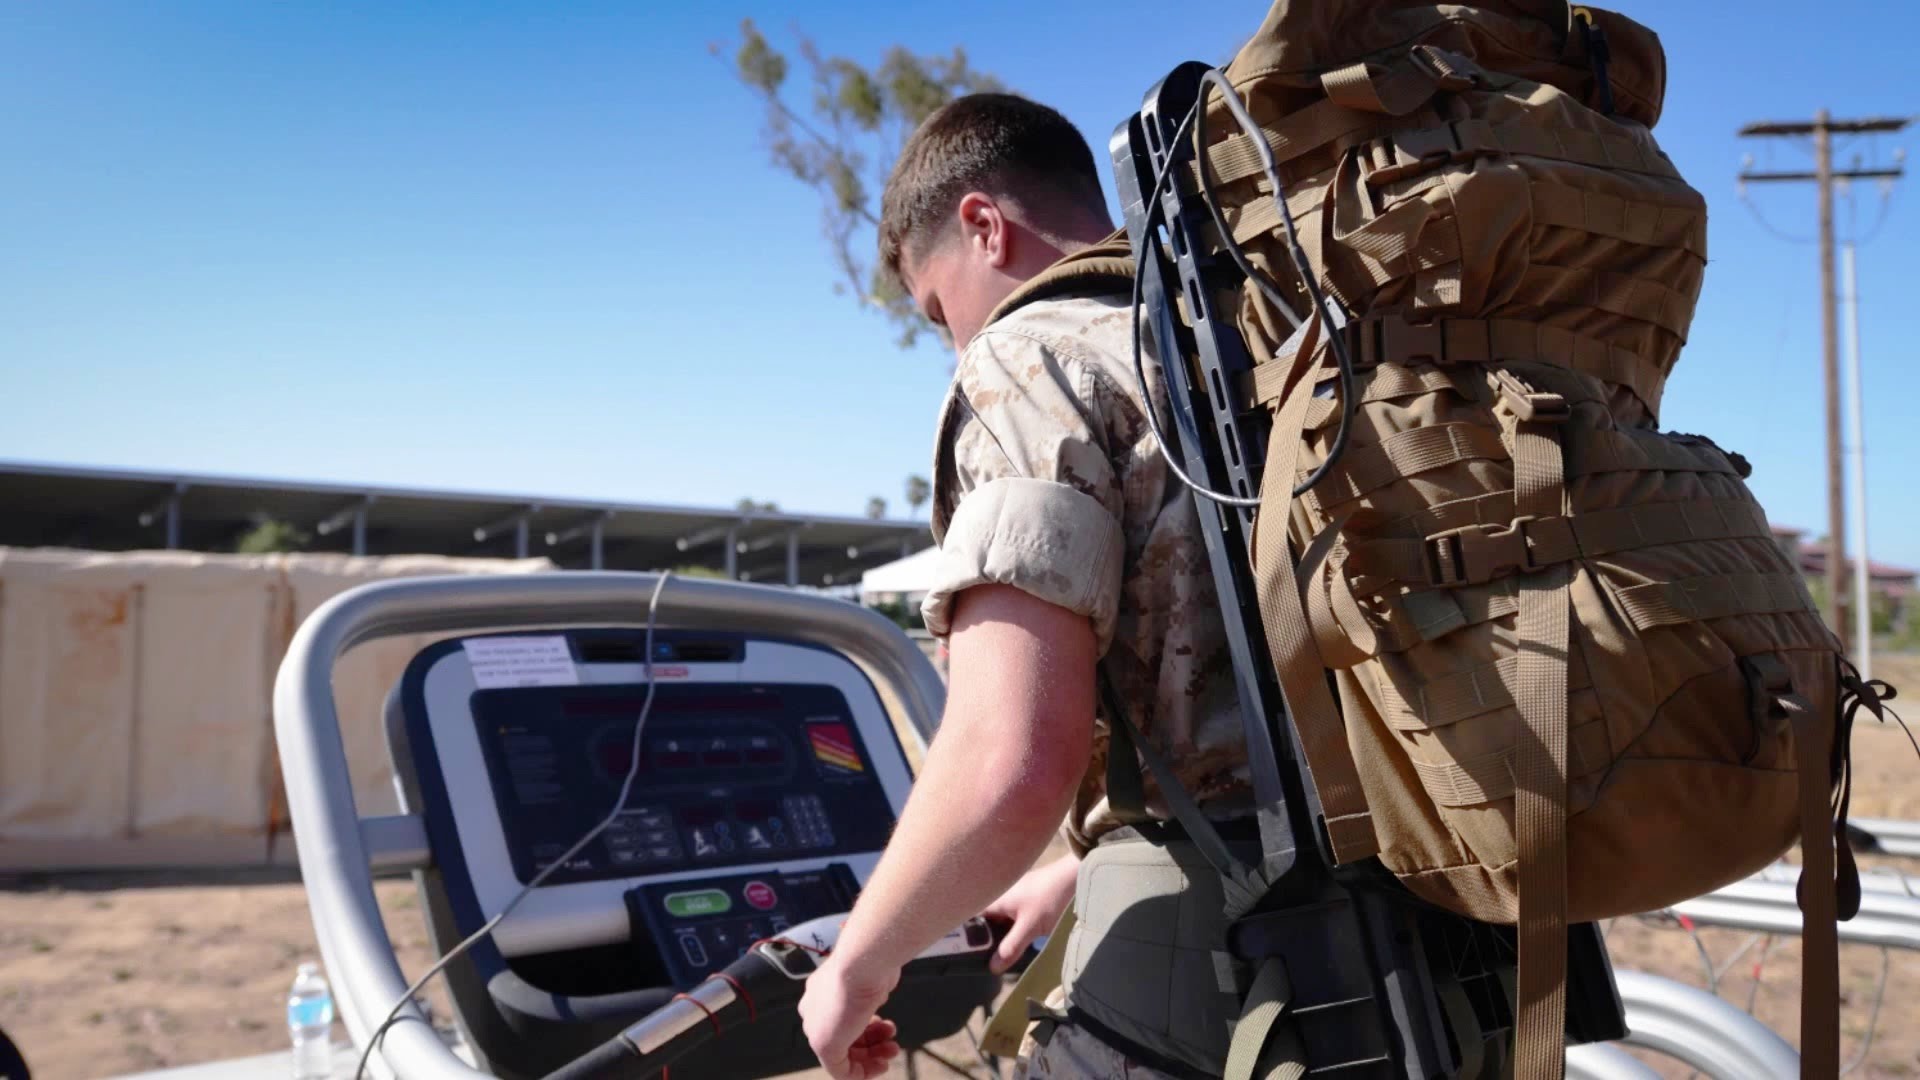 Marines TV - Lightning Packs Electricity-Generating Backpack Field Testing [1080p]